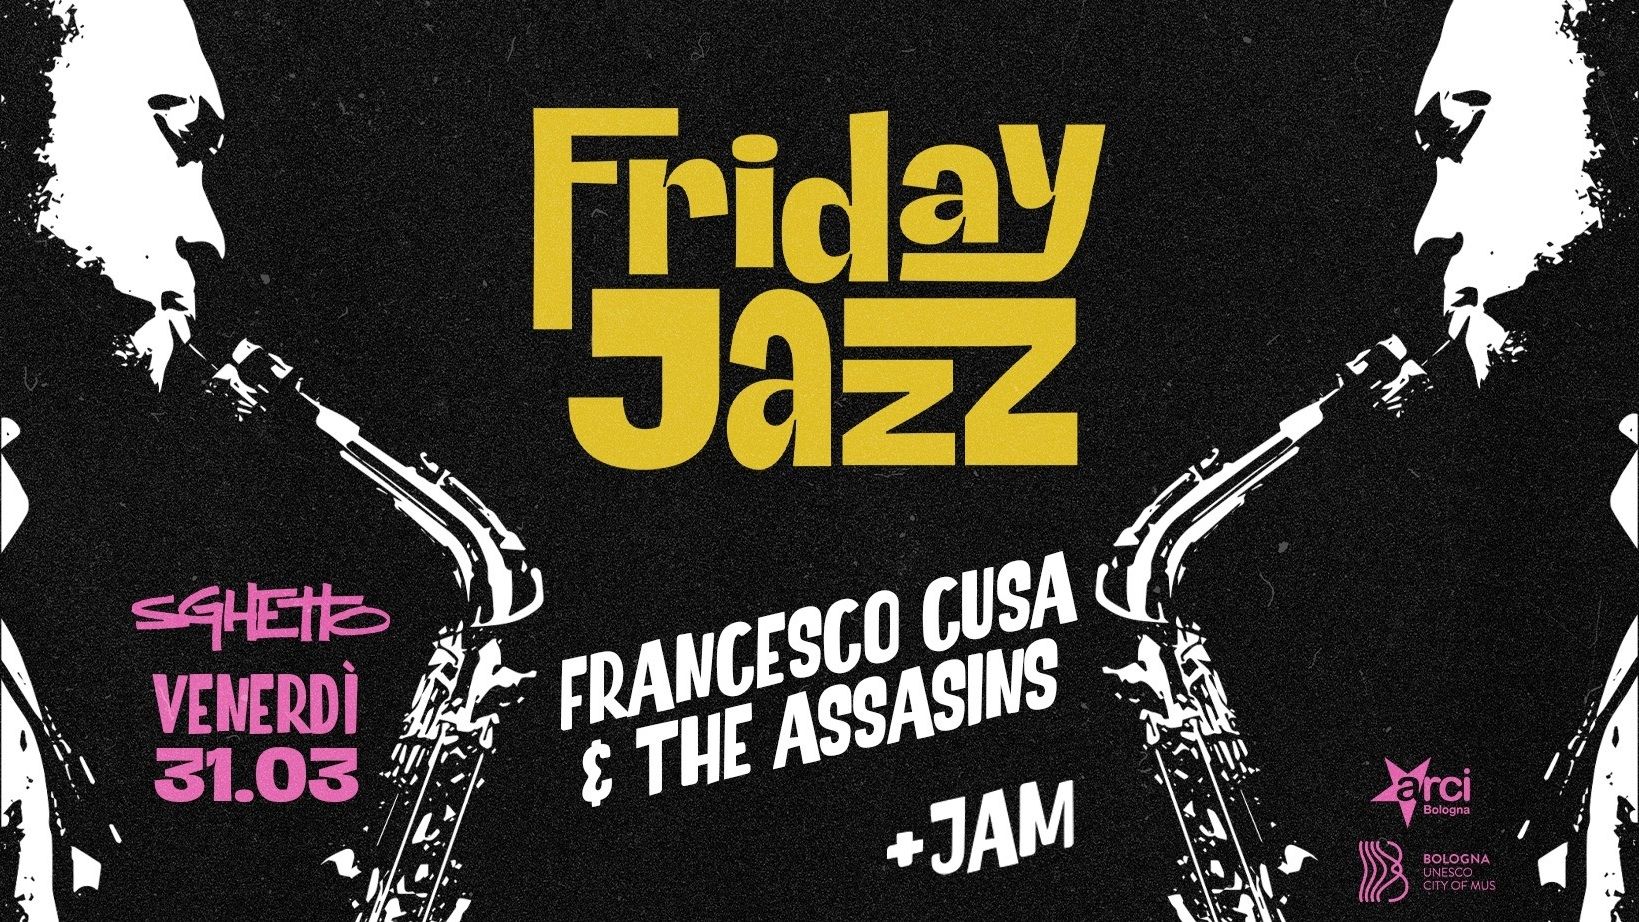 Friday Jazz - Francesco Cusa & The Assassins + jam